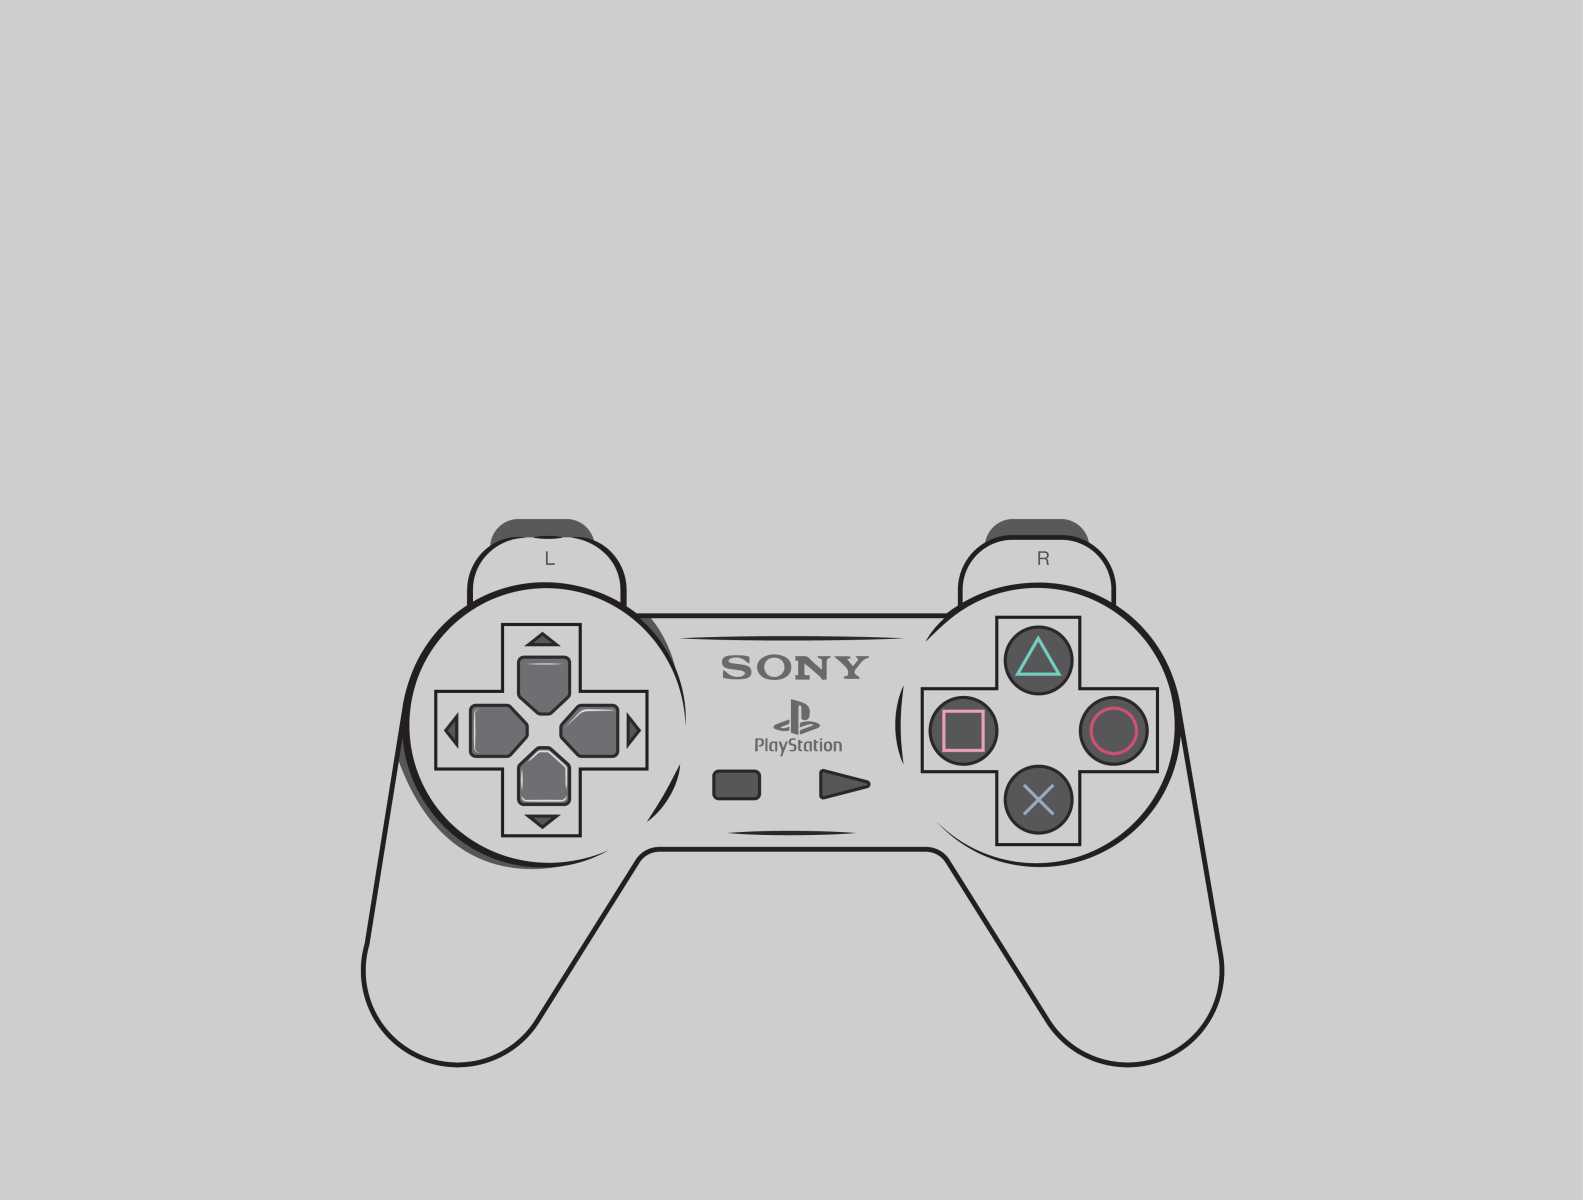 Playstation Controller by Kemdirim Akujuobi on Dribbble